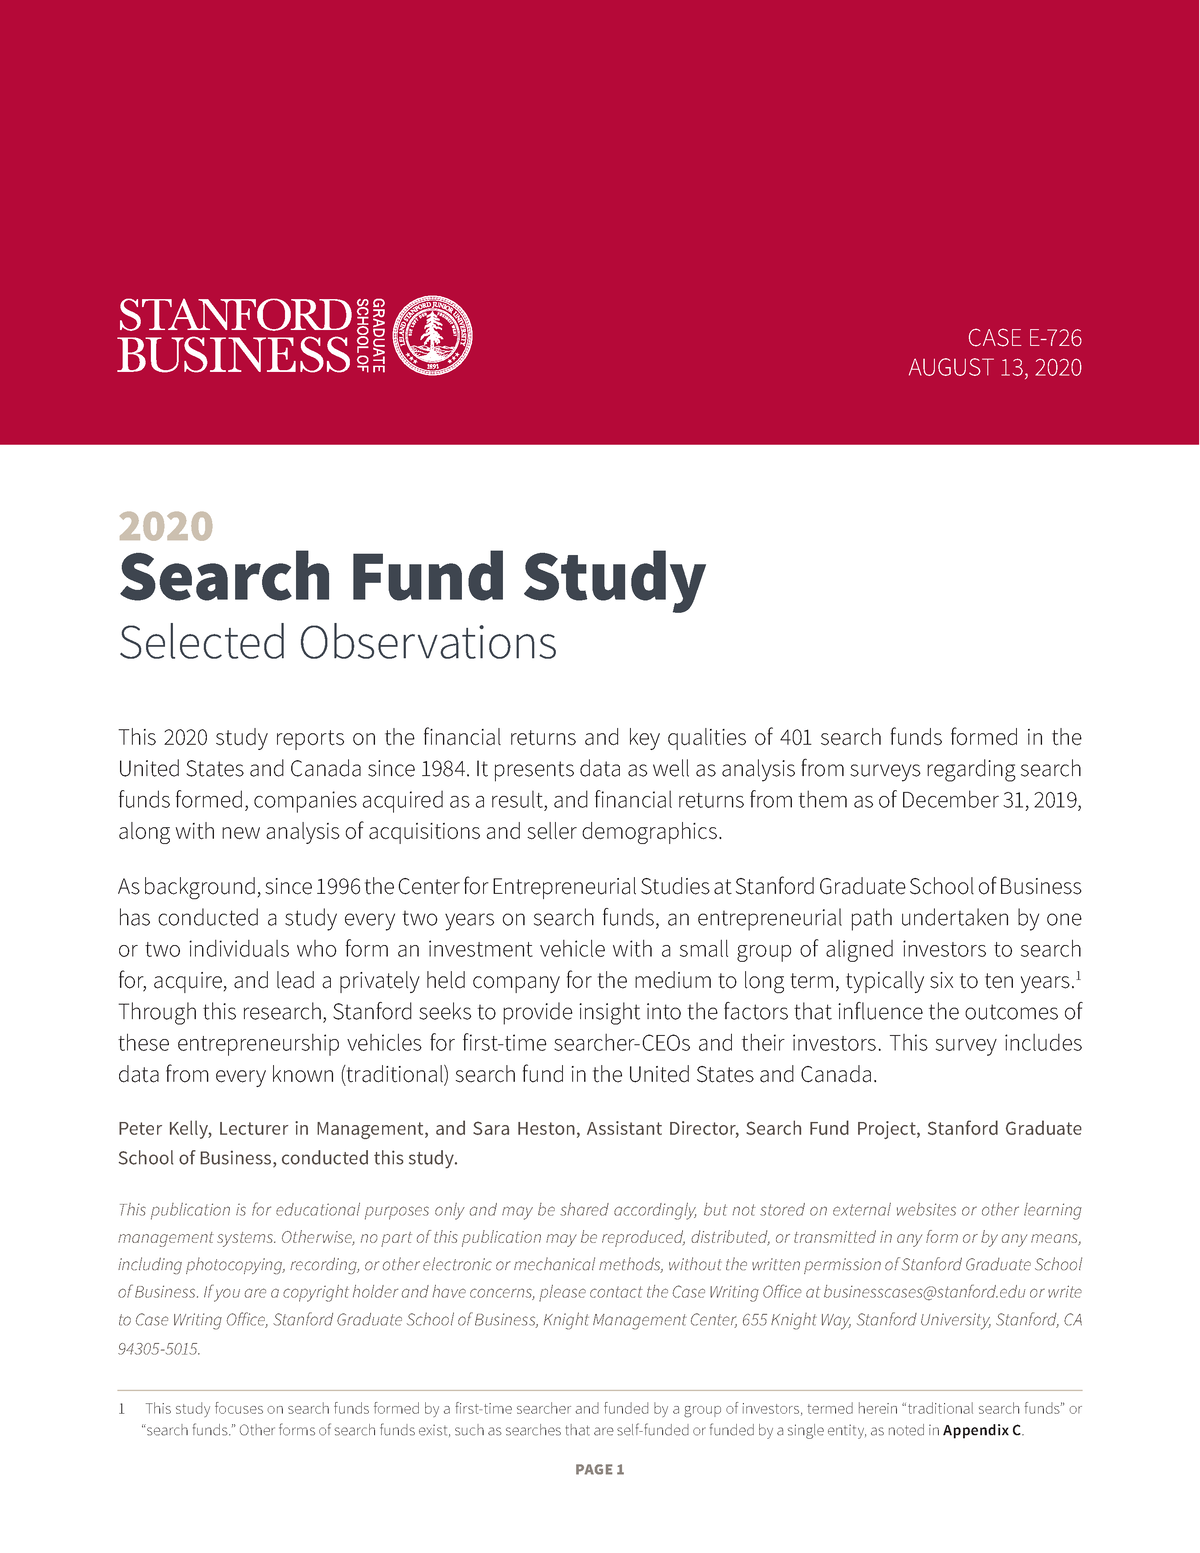 search fund case study pdf